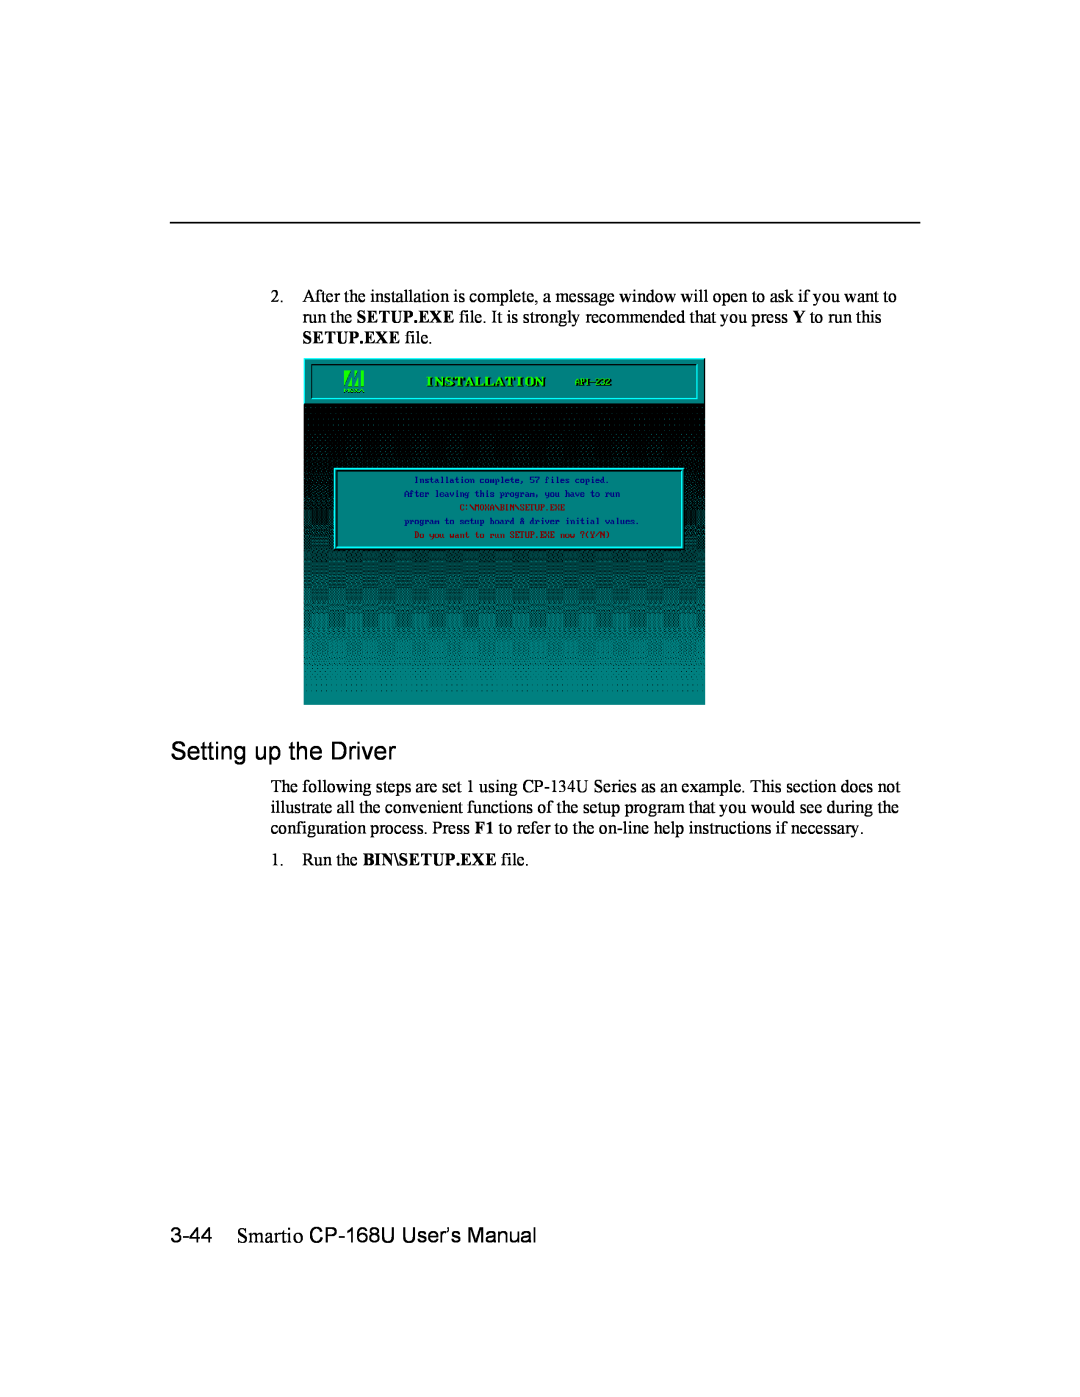 Moxa Technologies user manual Setting up the Driver, Smartio CP-168U User’s Manual 